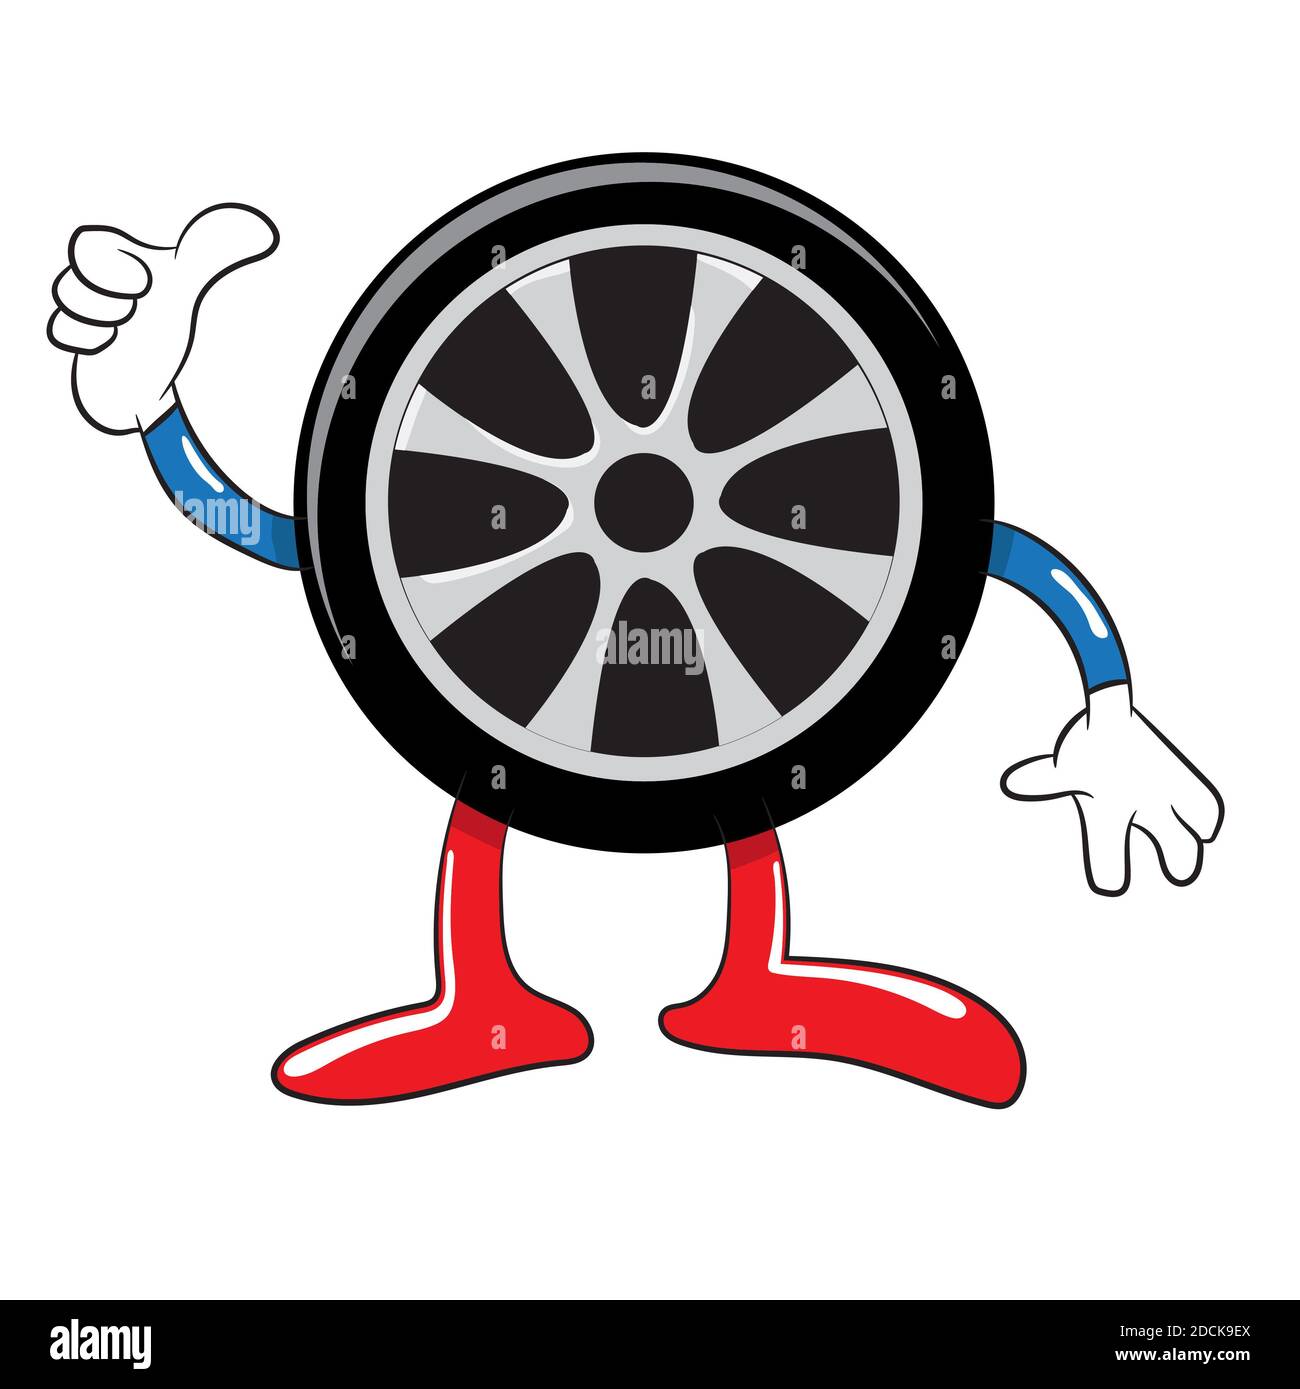 Tire thumbs up mascot vector cartoon illustration Stock Photo